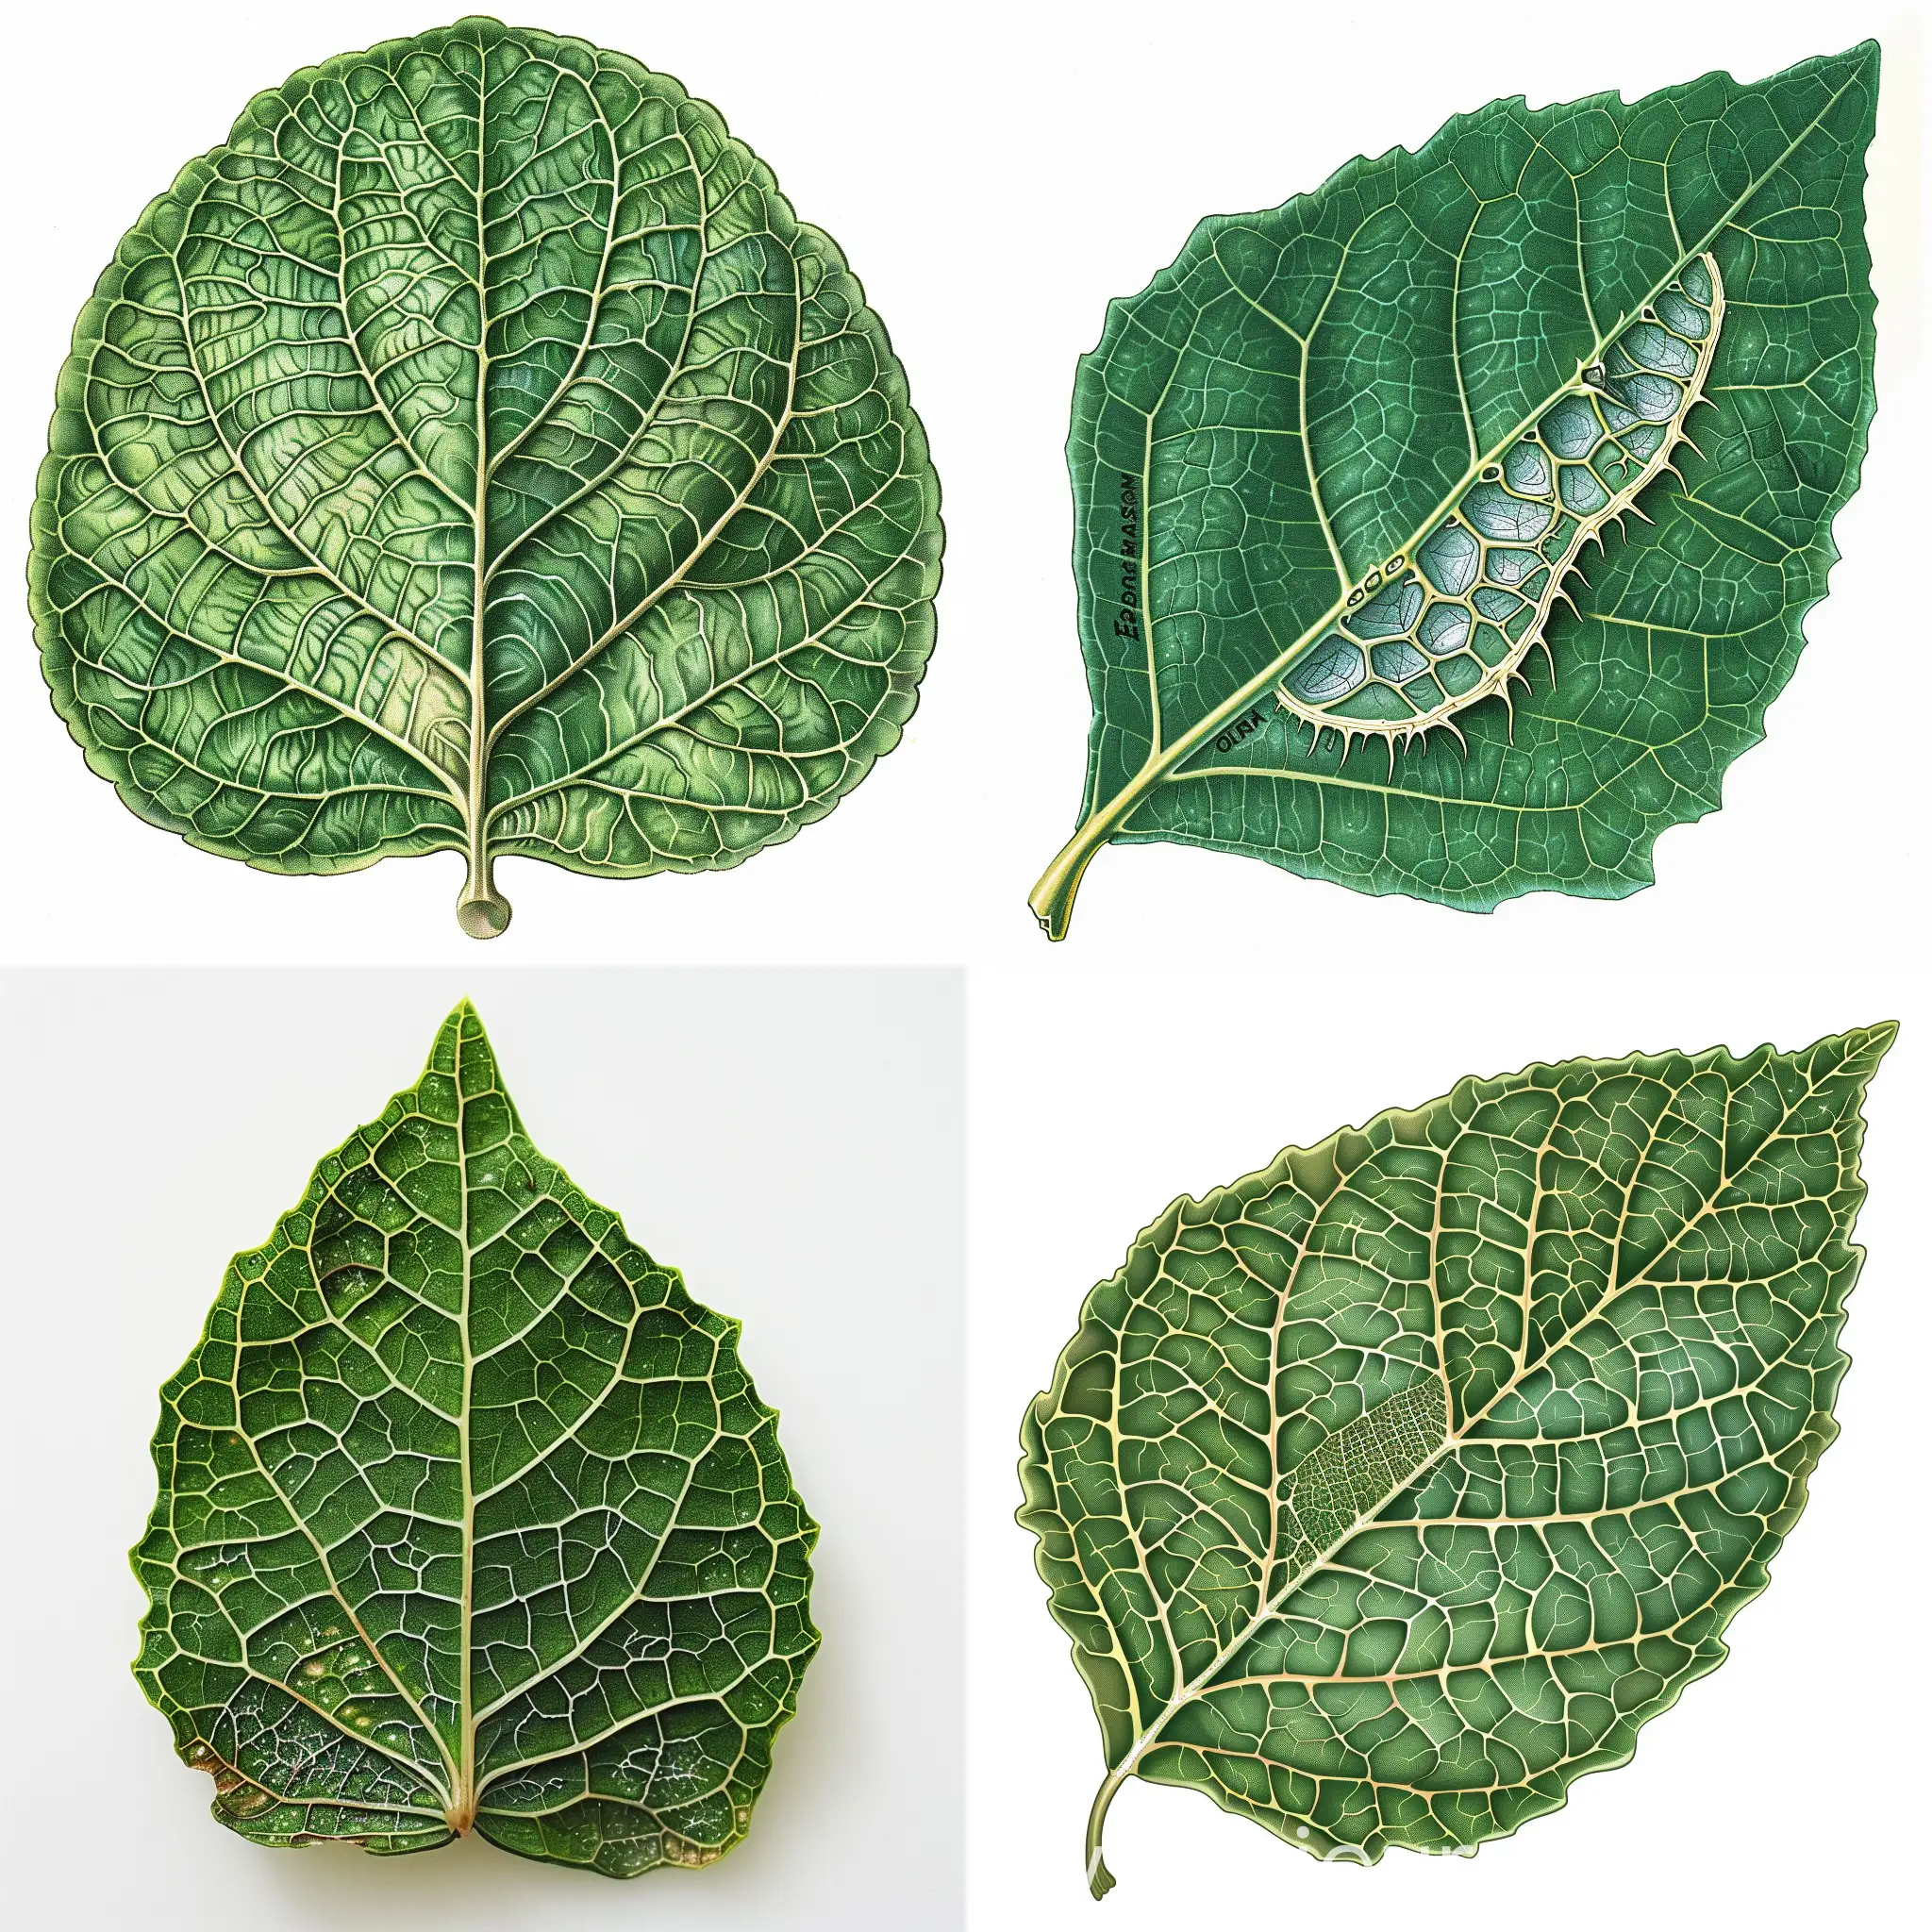 Inyernal,structure, of,leaf